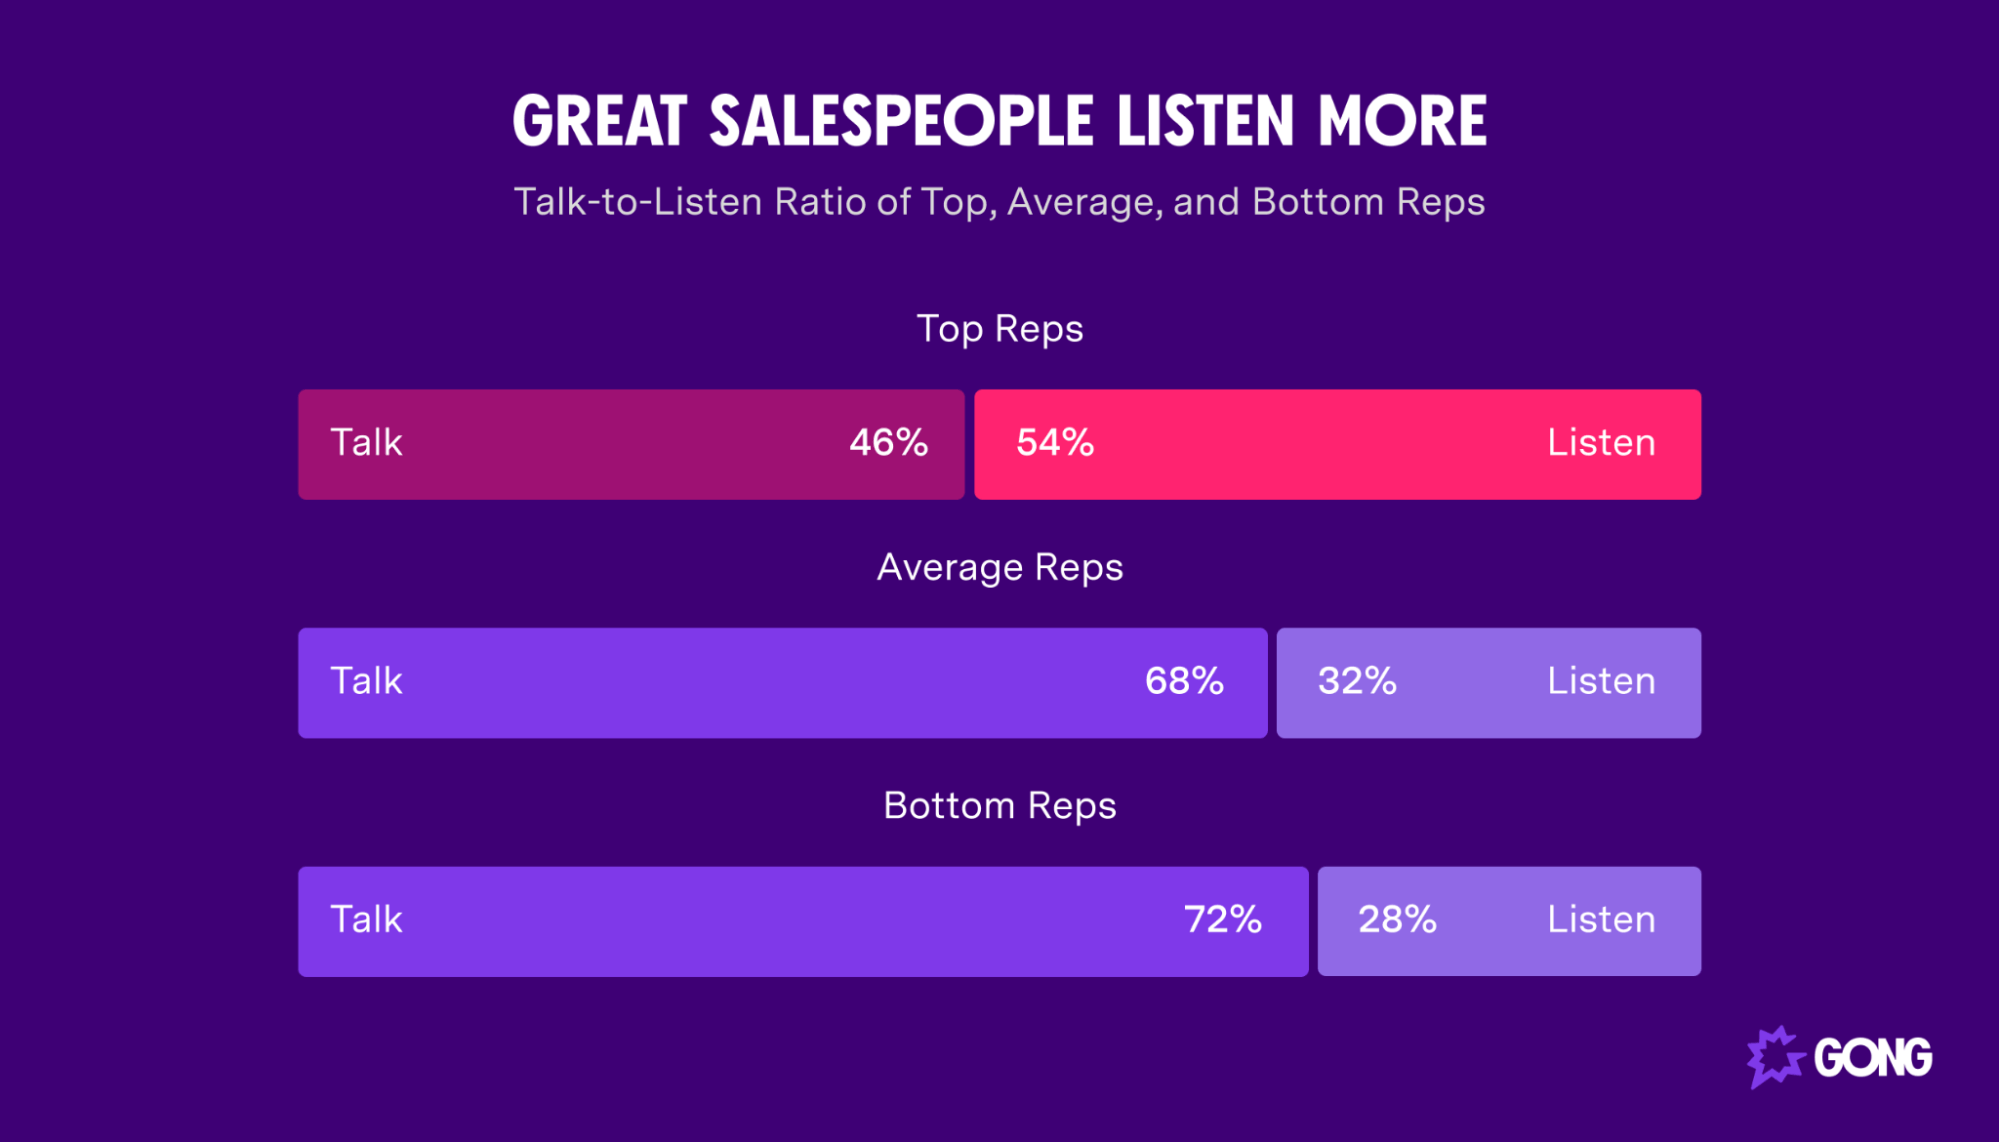 Great salespeople listen more